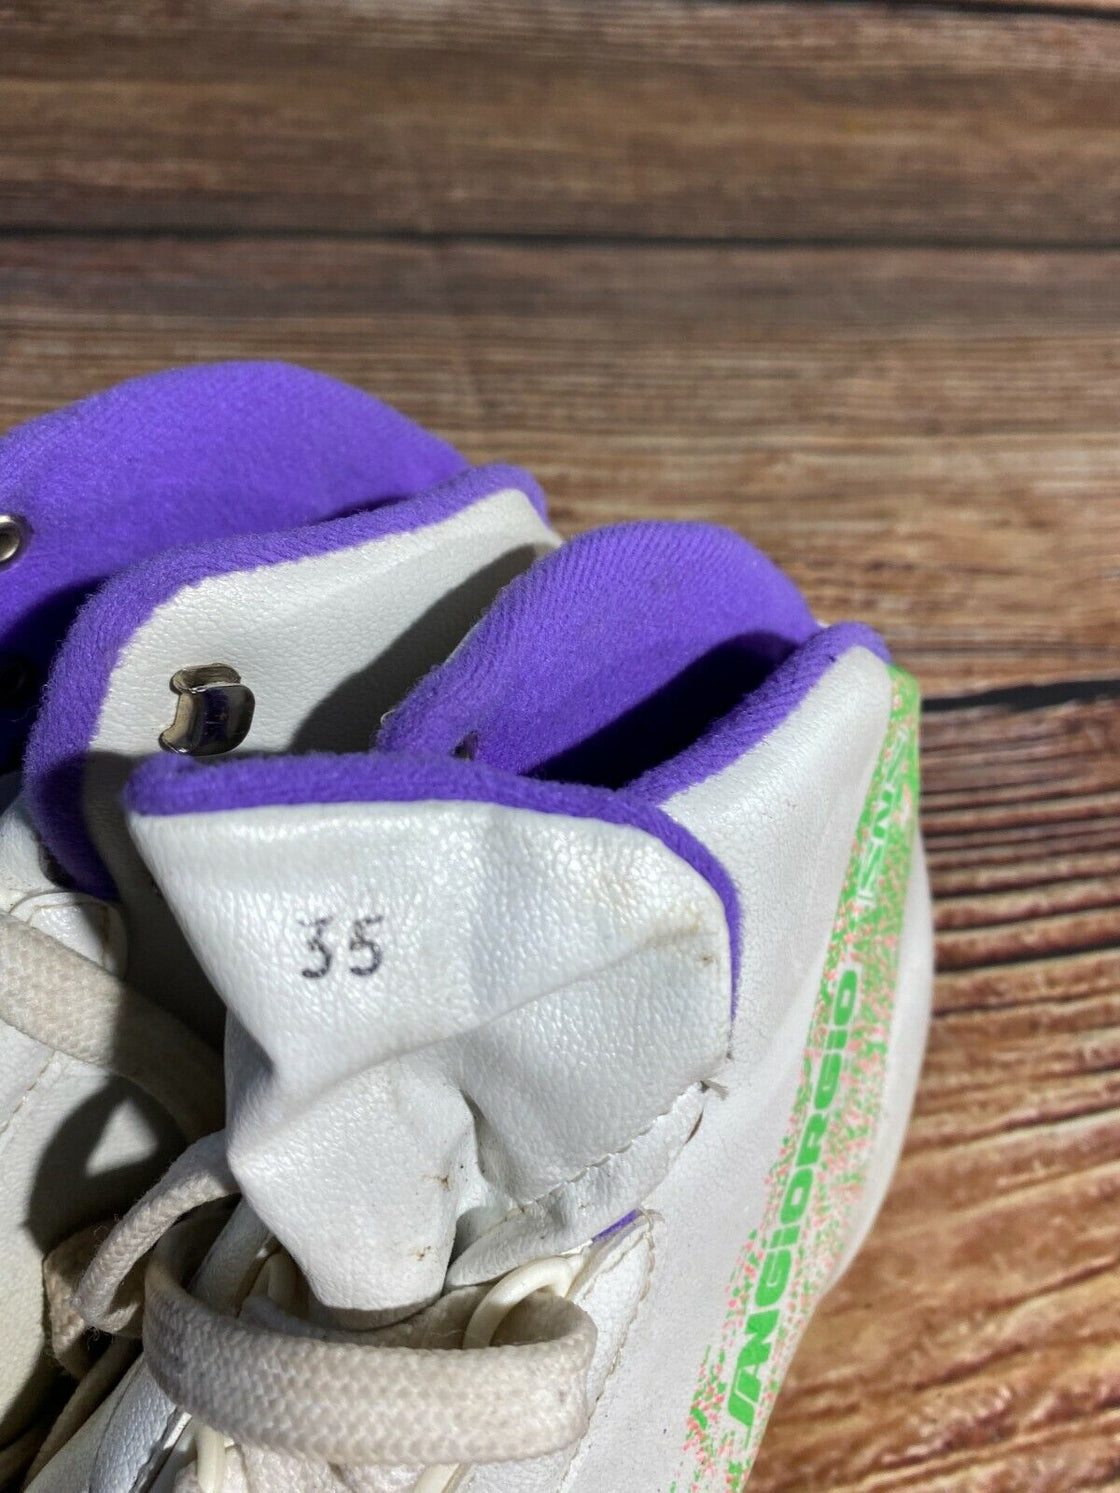 SANGIORGIO Vintage Nordic Cross Country Ski Boots EU35, US4.5 SNS Old Bindings